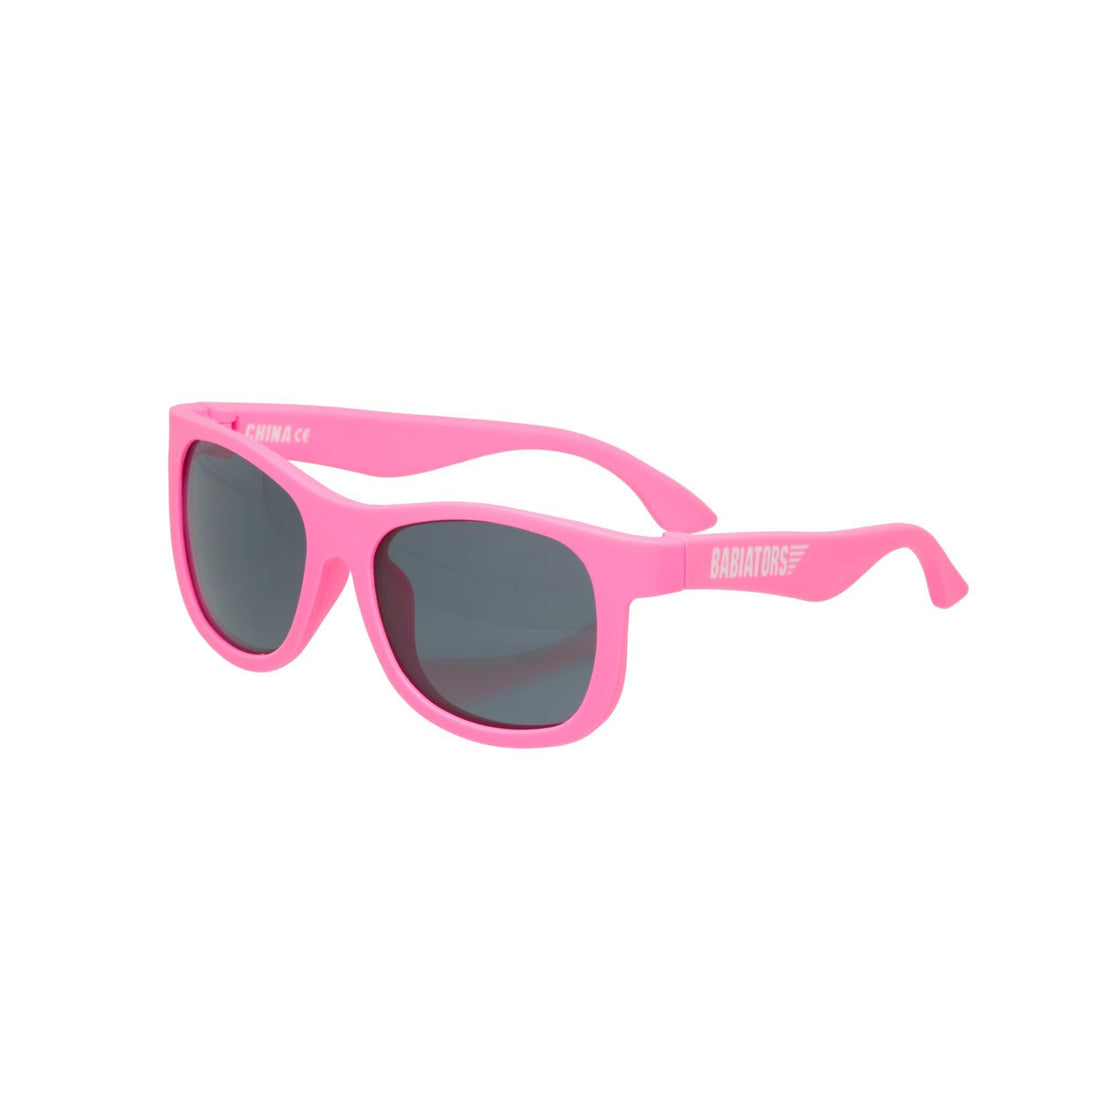 Navigator Sunglasses-Sunglasses-Babiators-Ages 0-2-Pink-bluebird baby & kids